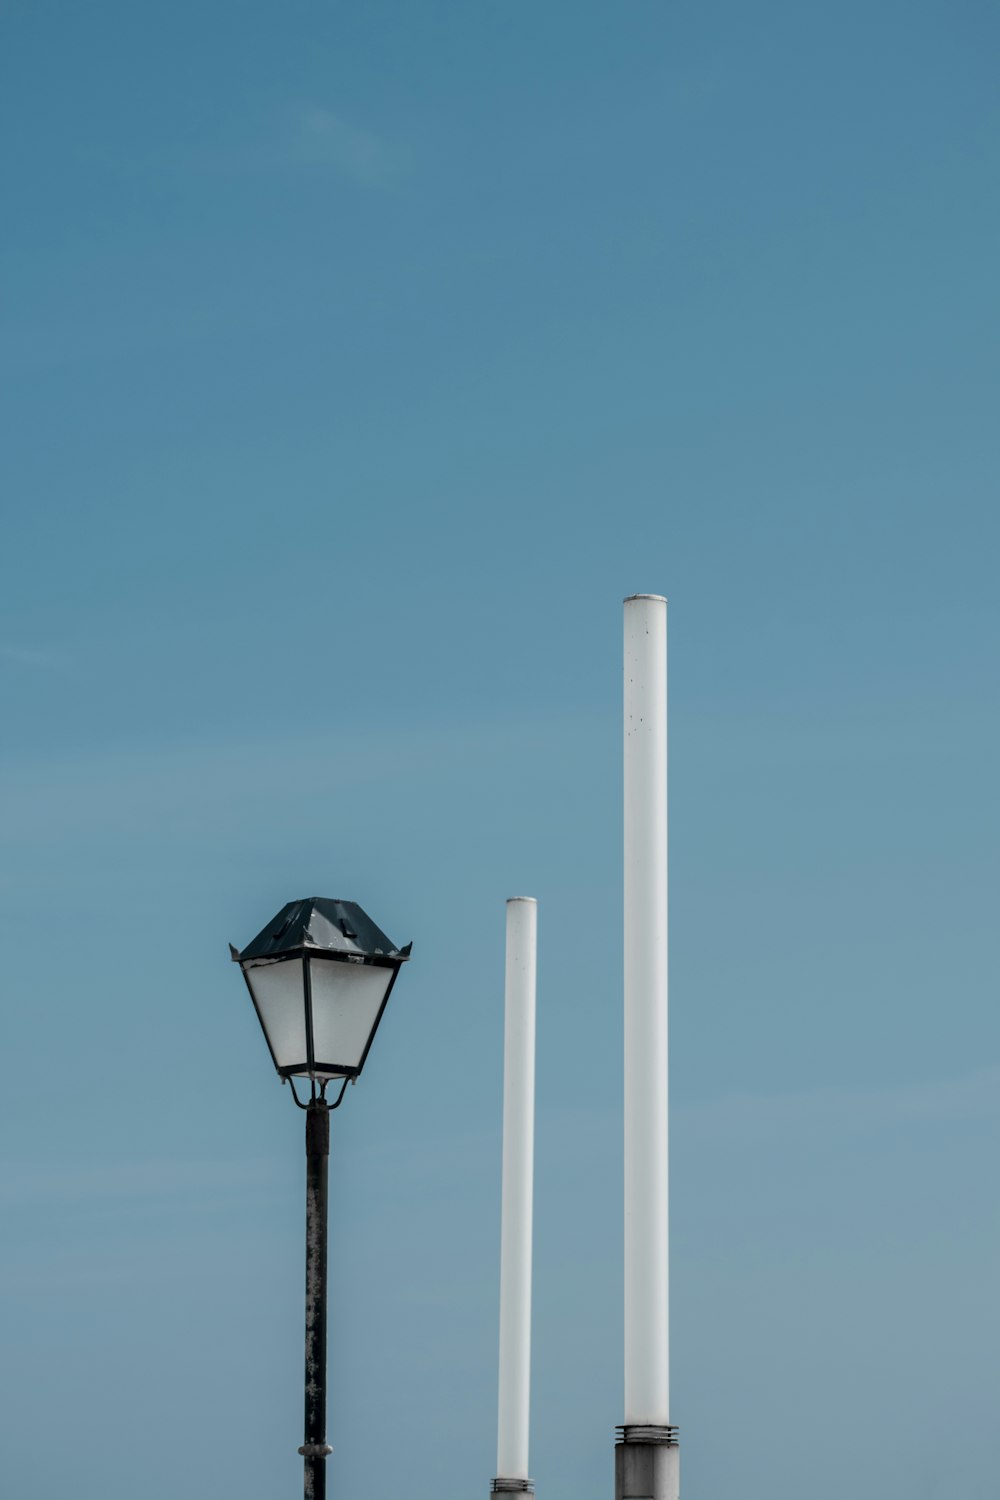 a street light sitting next to a white pole